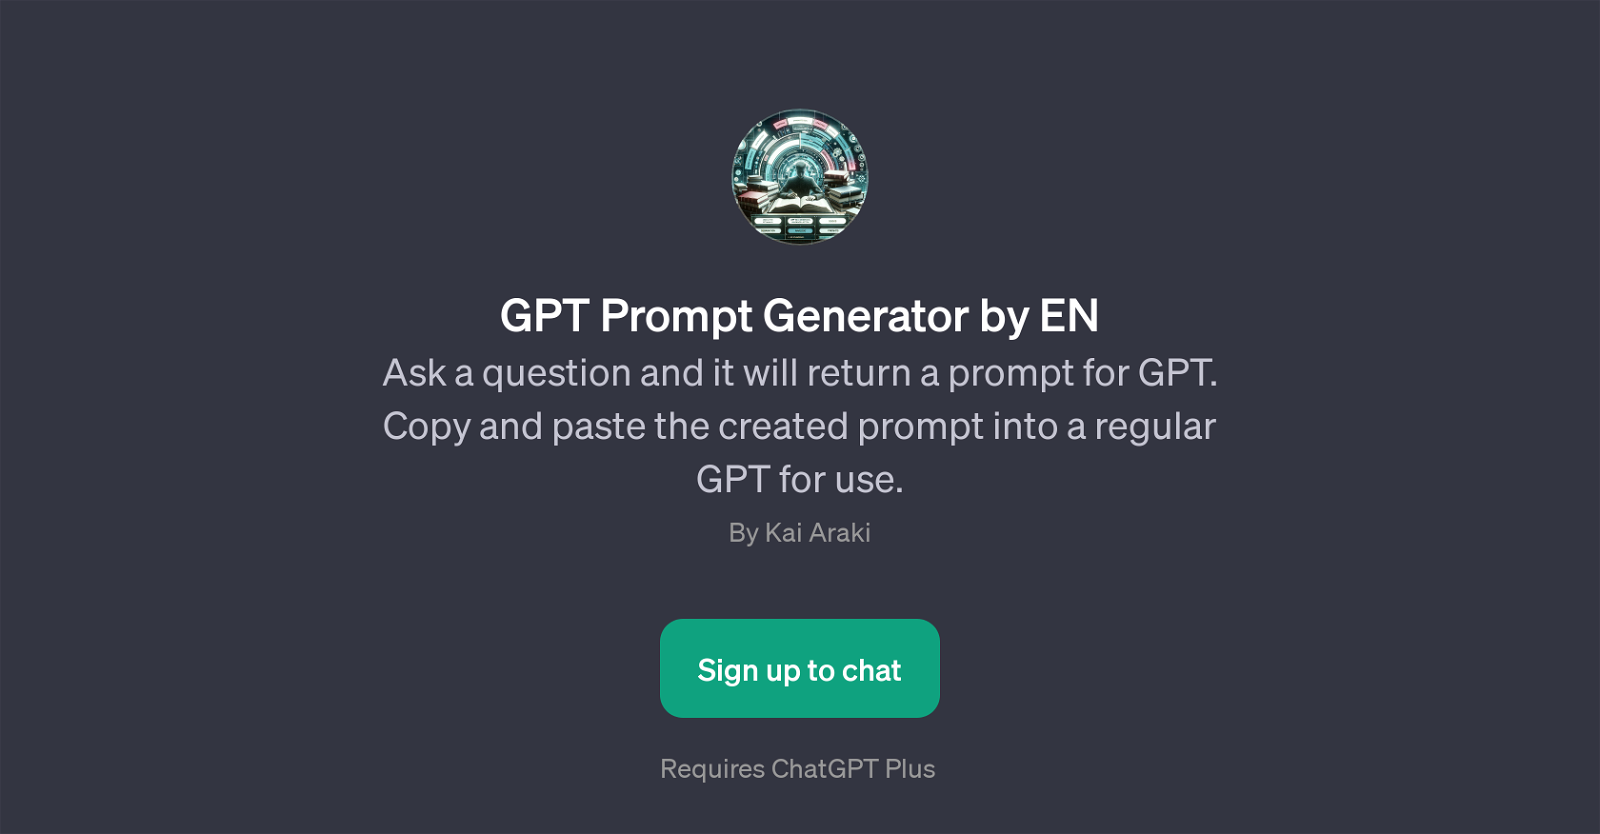 GPT Prompt Generator by EN website